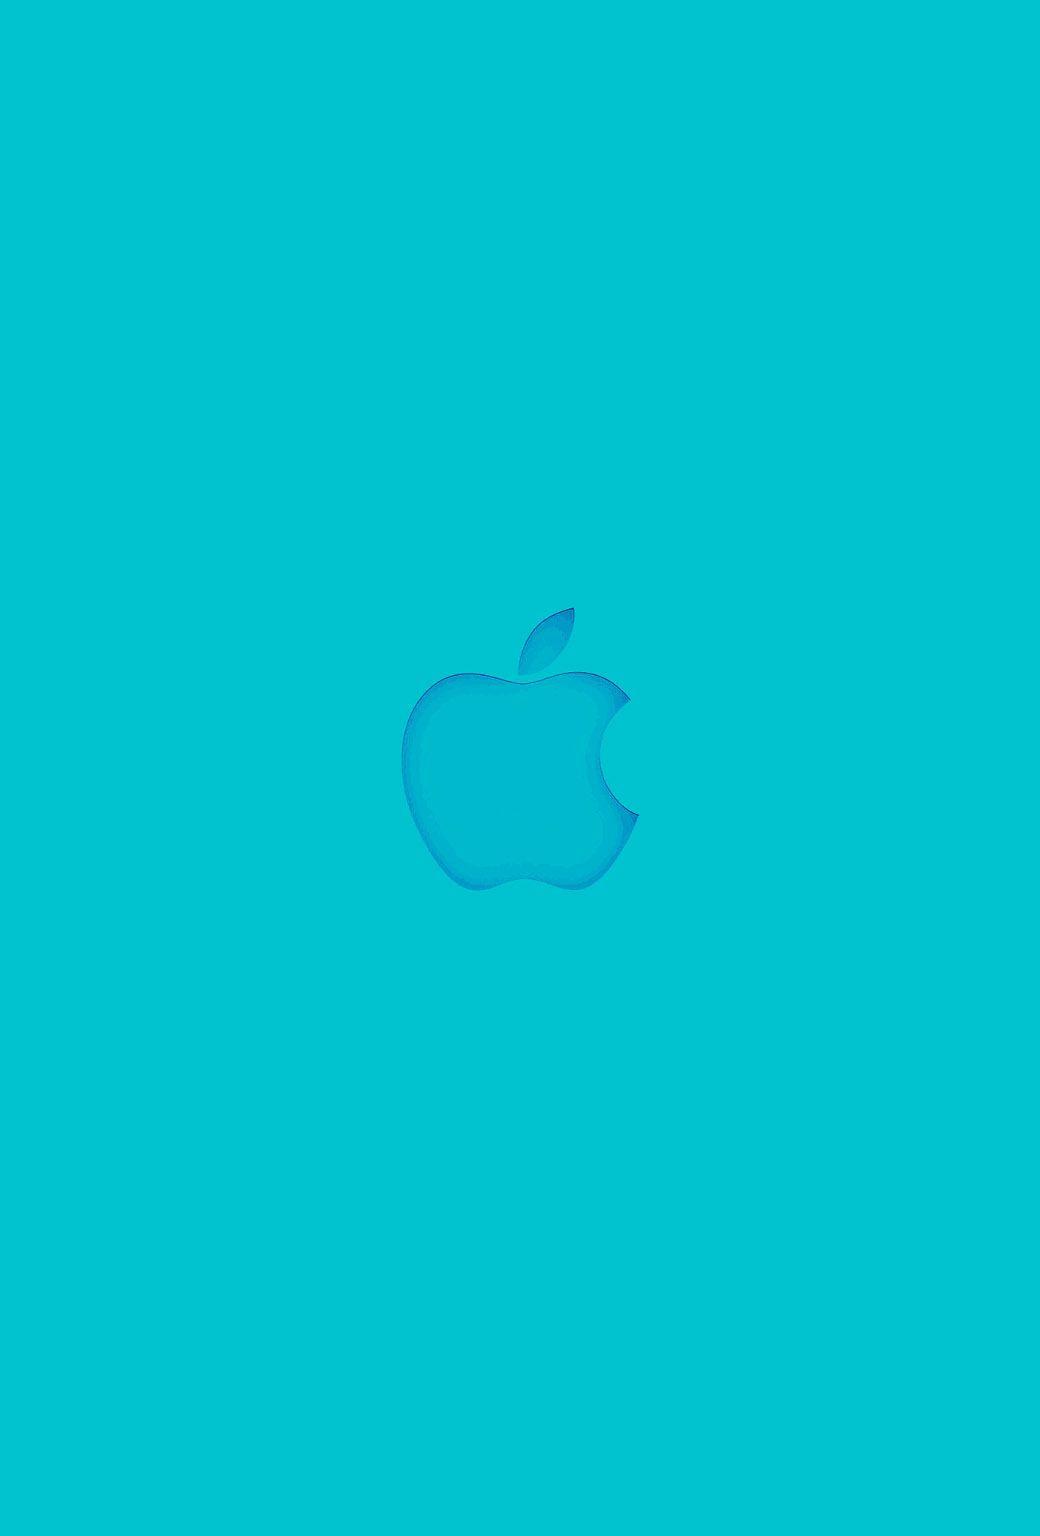 apple logo wallpaper blue